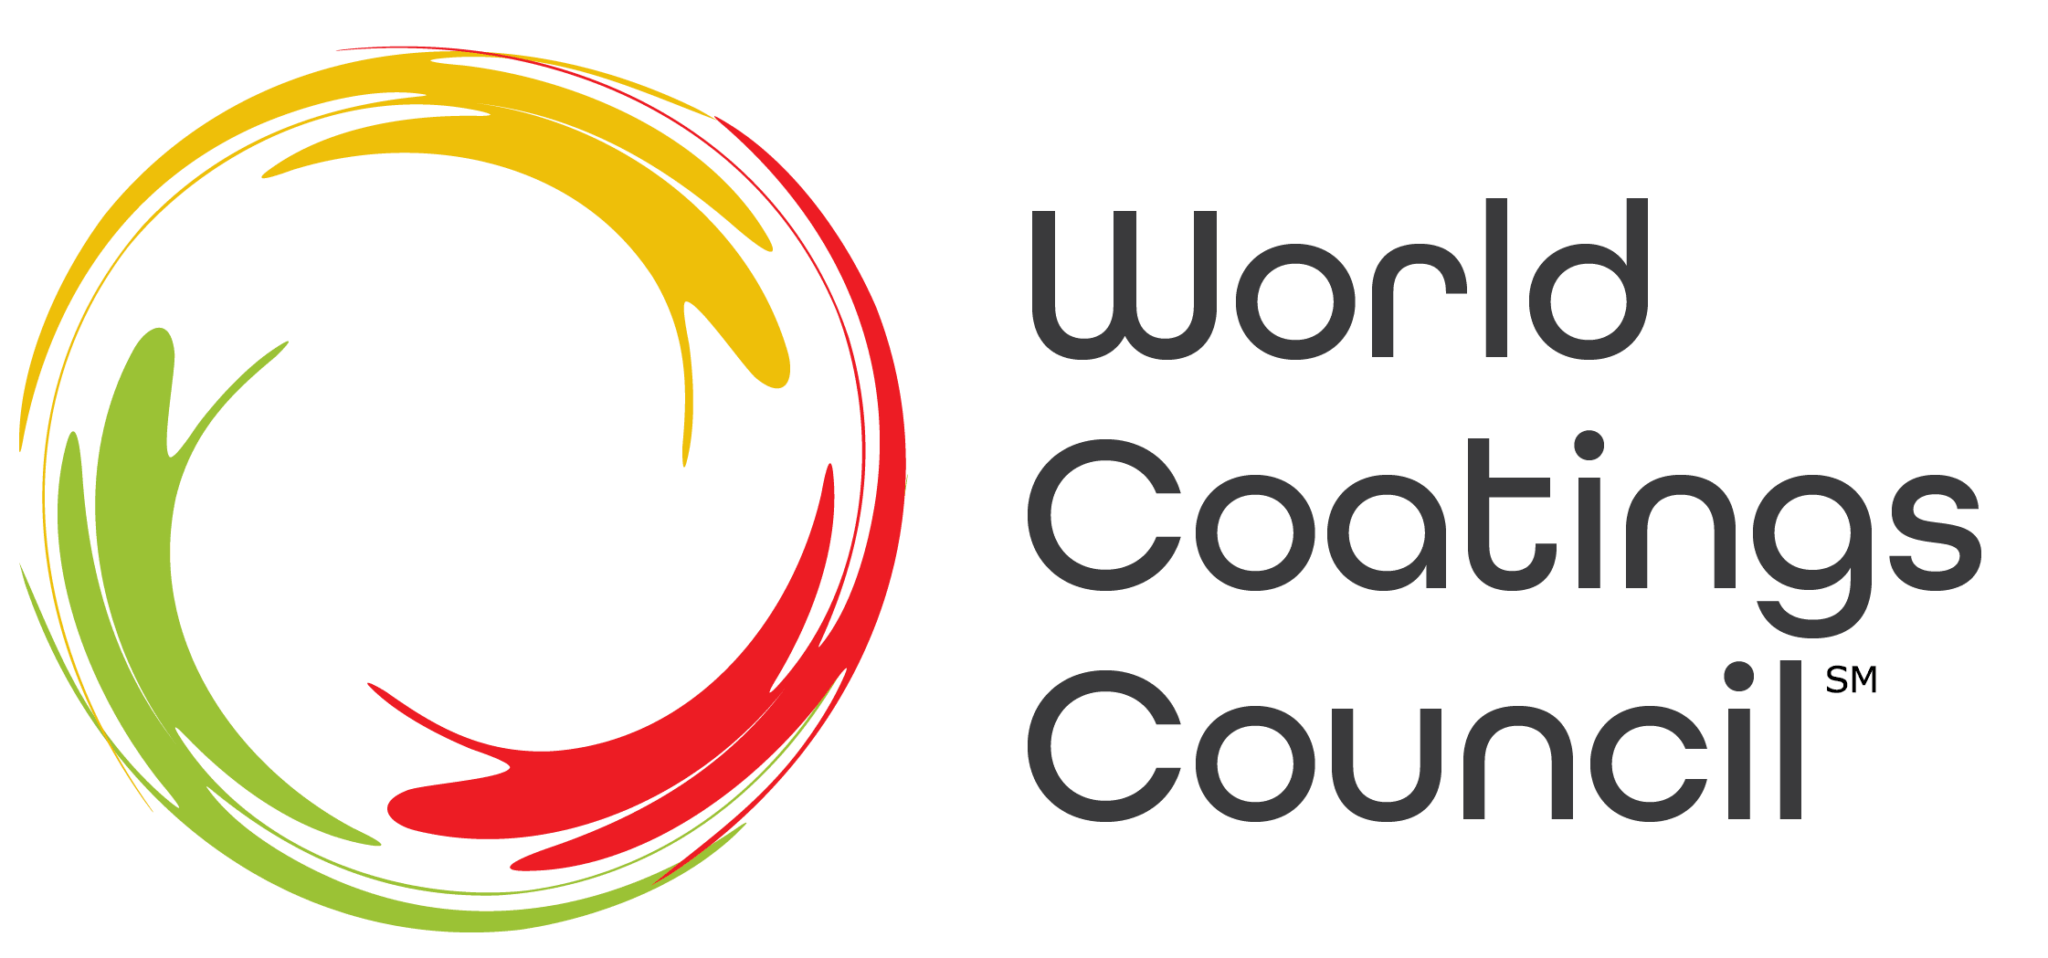 World Coatings Council Fipec